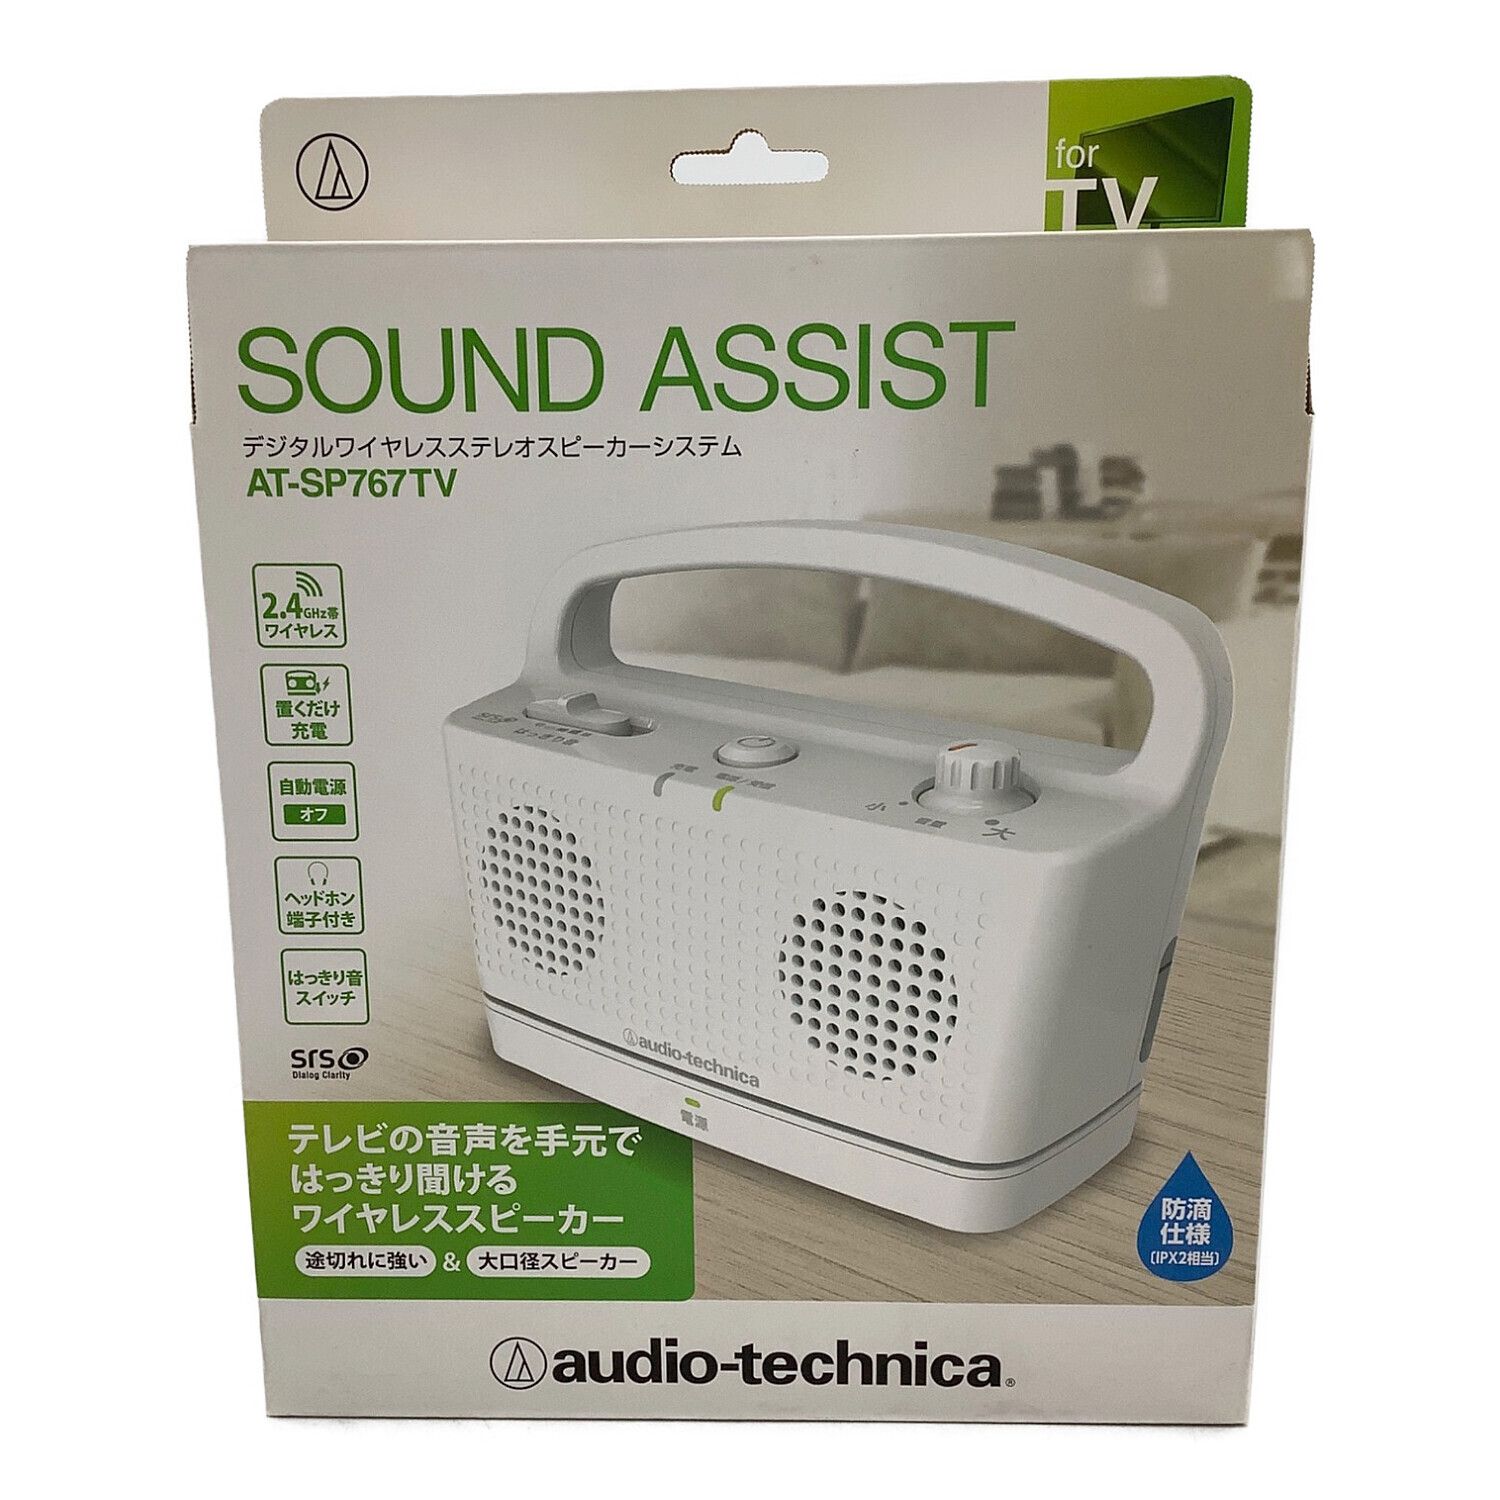 audio-technica SOUND ASSIST お手元テレビスピーカー ワイヤレス